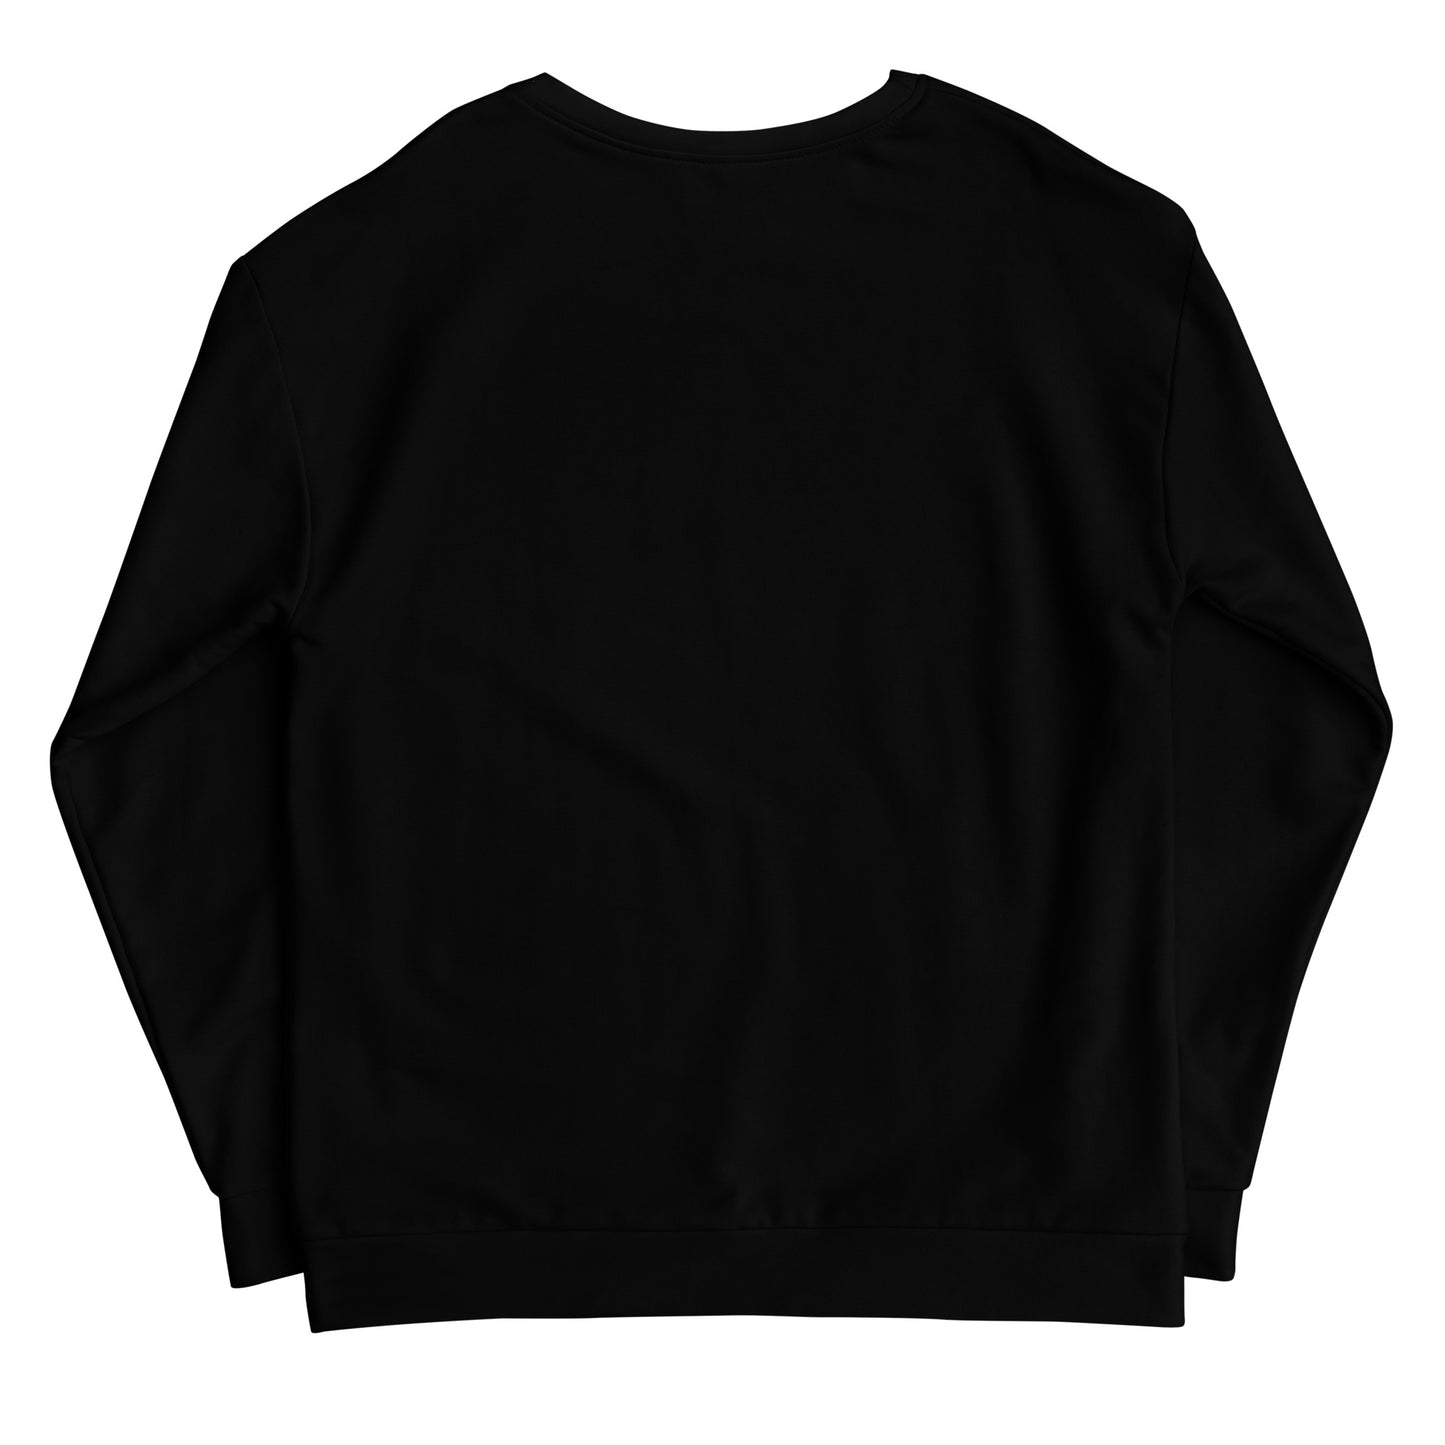 Capricorn Sweatshirt Black